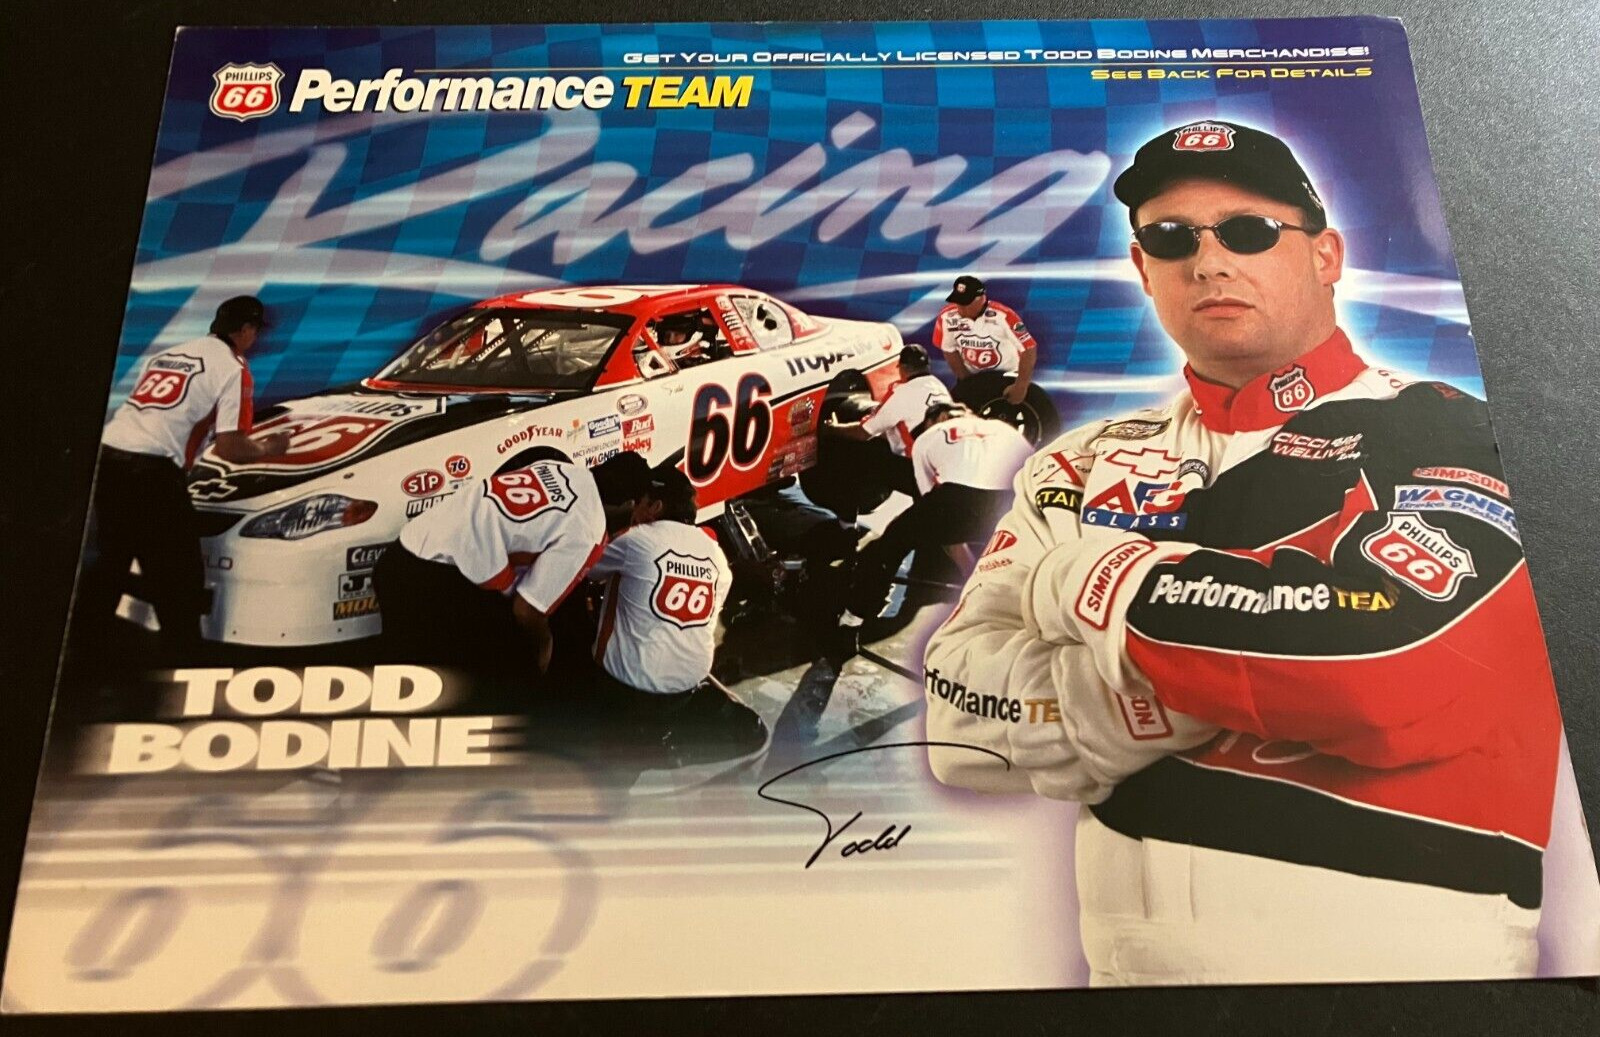 2000 Todd Bodine #66 Phillips 66 Chevy Monte Carlo - NASCAR Hero Card Handout